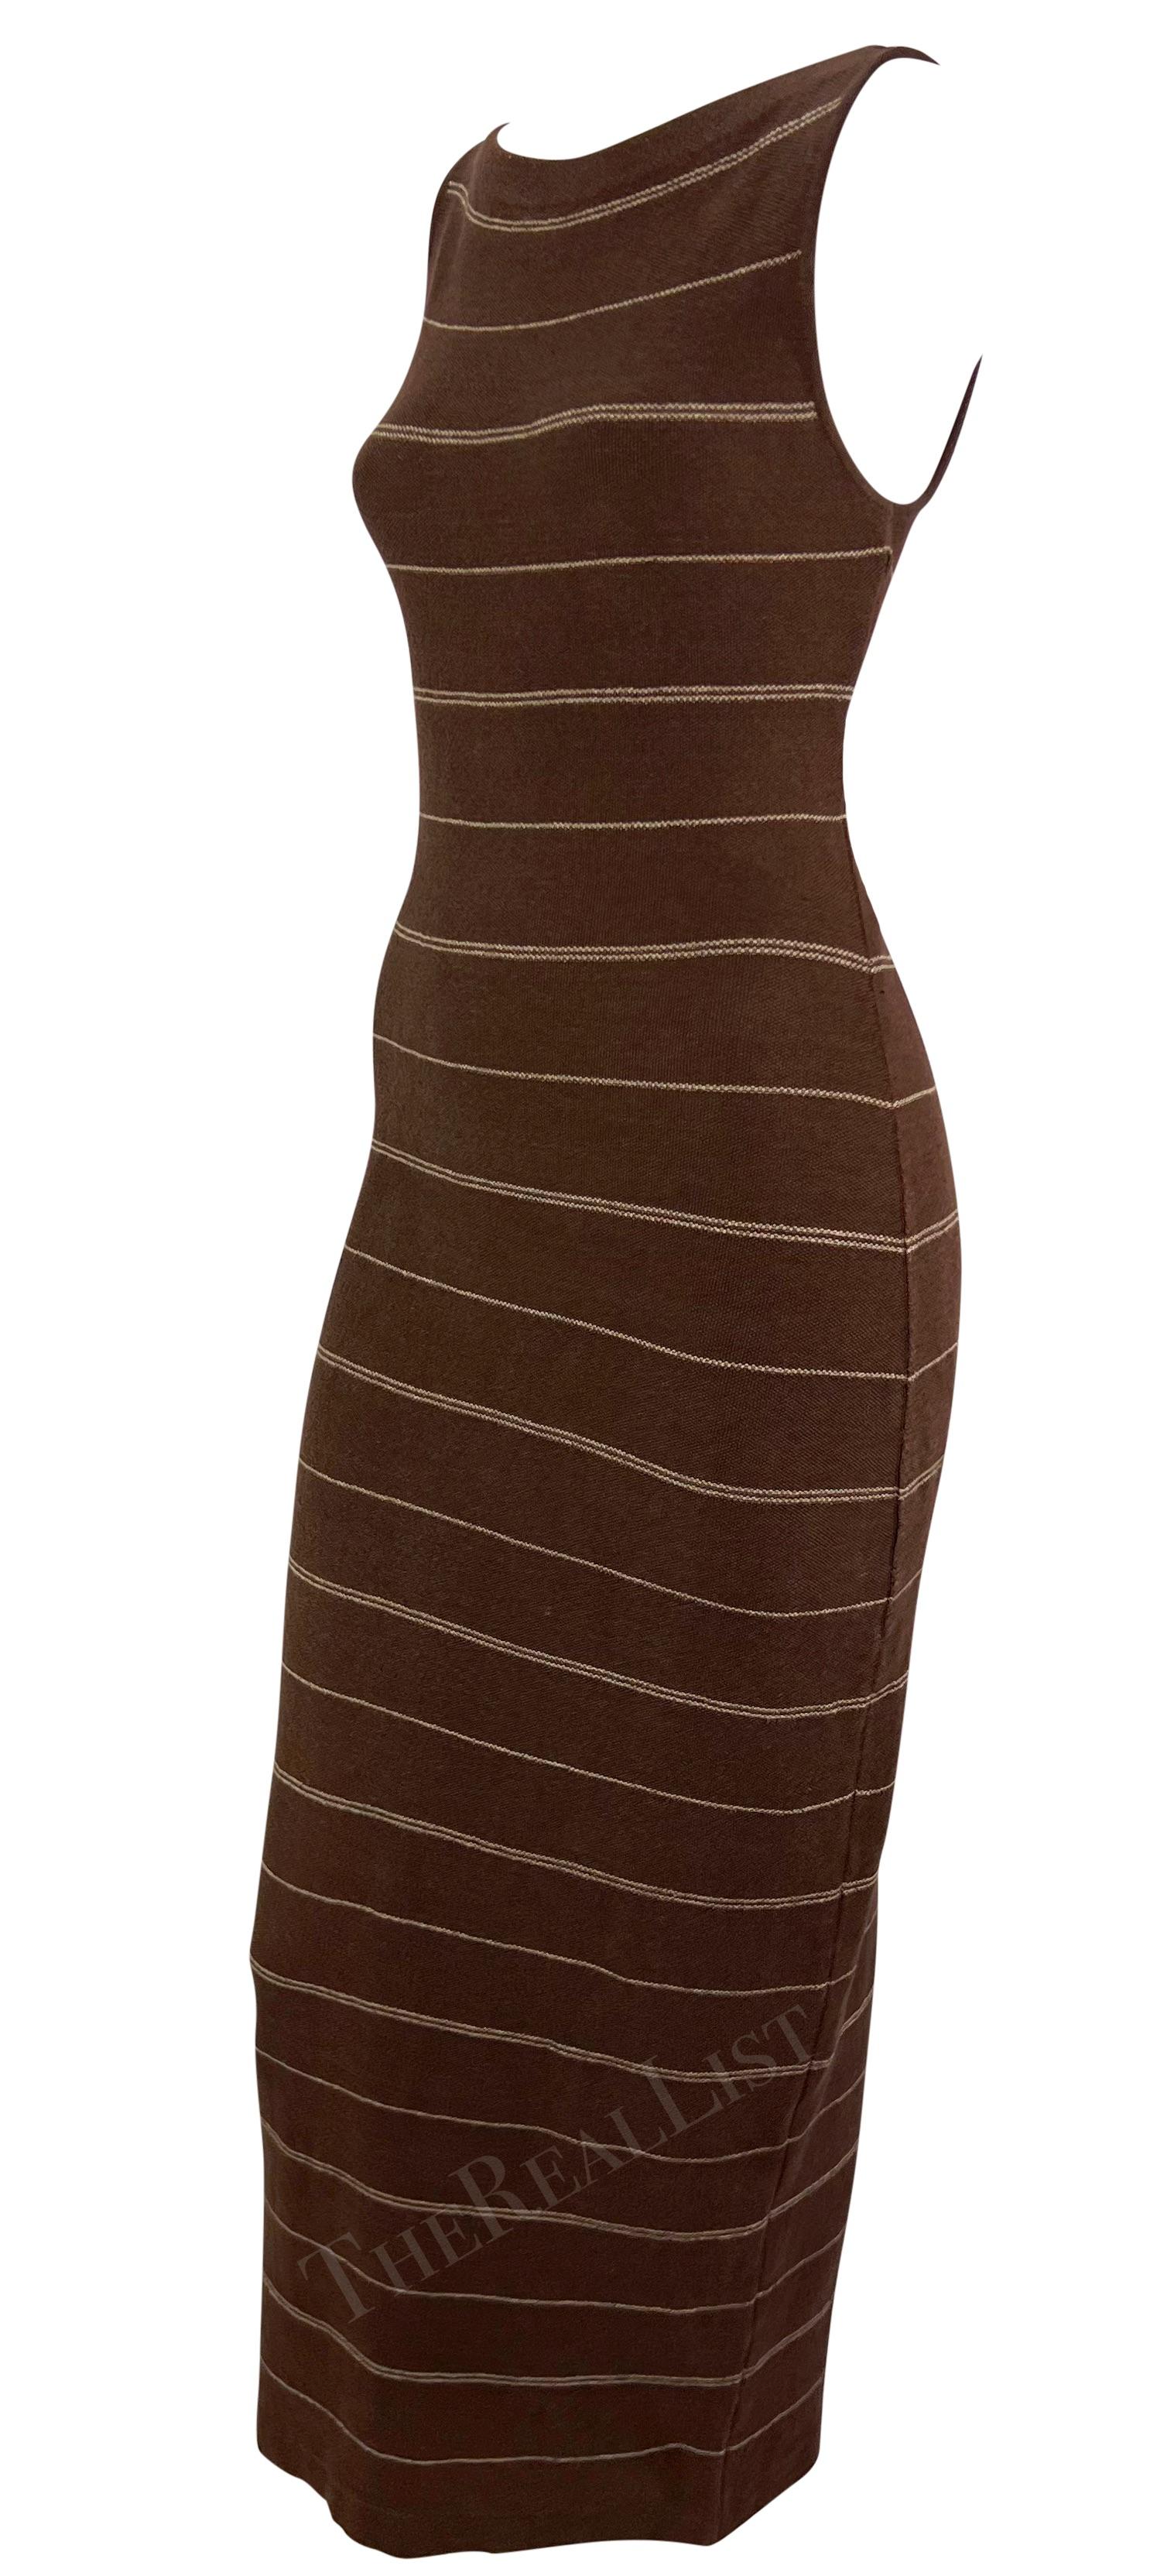 S/S 1997 Ralph Lauren Runway Stretch Knit Backless Brown Stripe Midi Dress For Sale 6